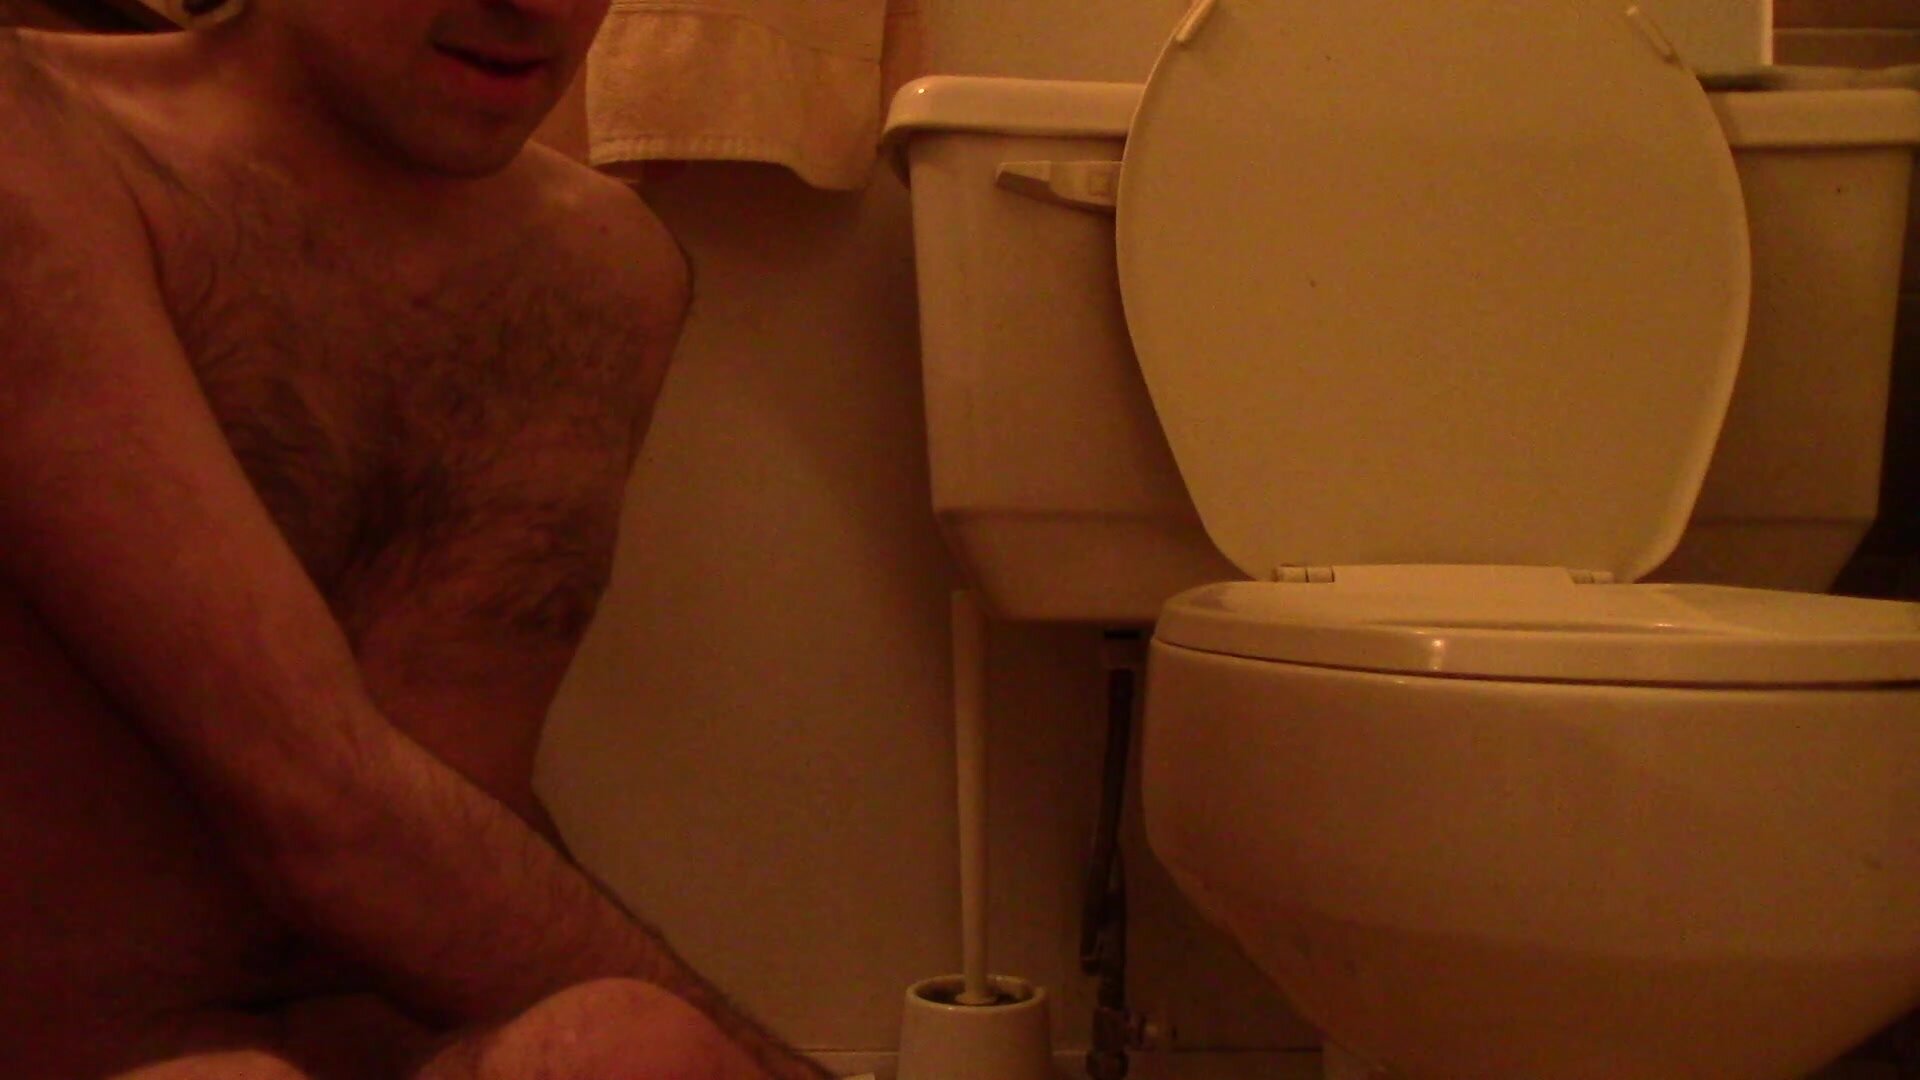 Flushing Poop Down the Toilet